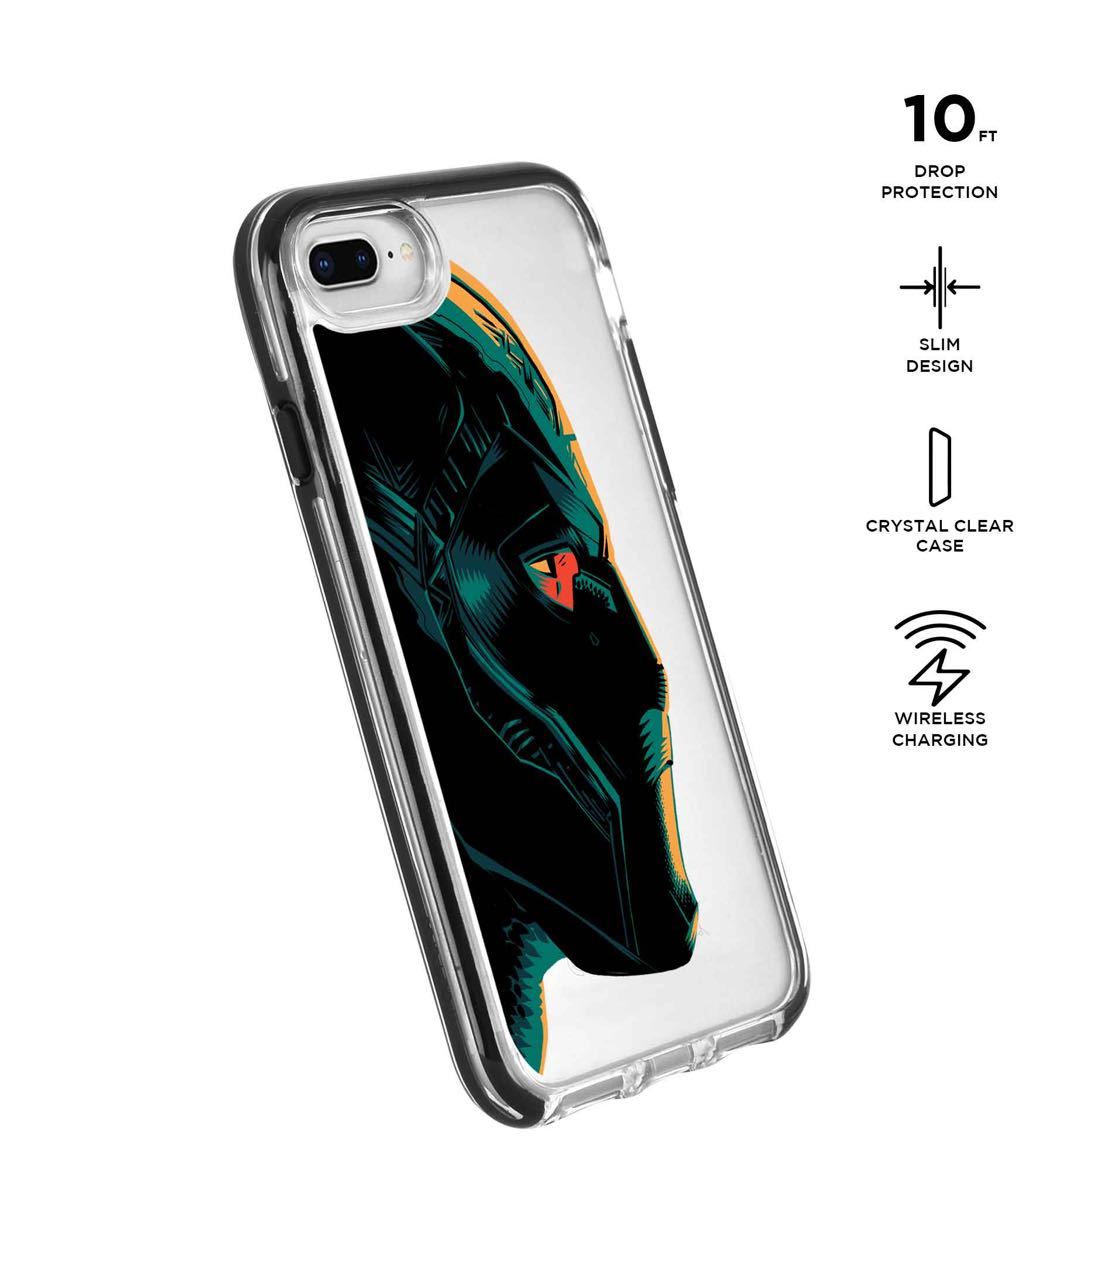 Illuminated Black Panther - Extreme Phone Case for iPhone 8 Plus